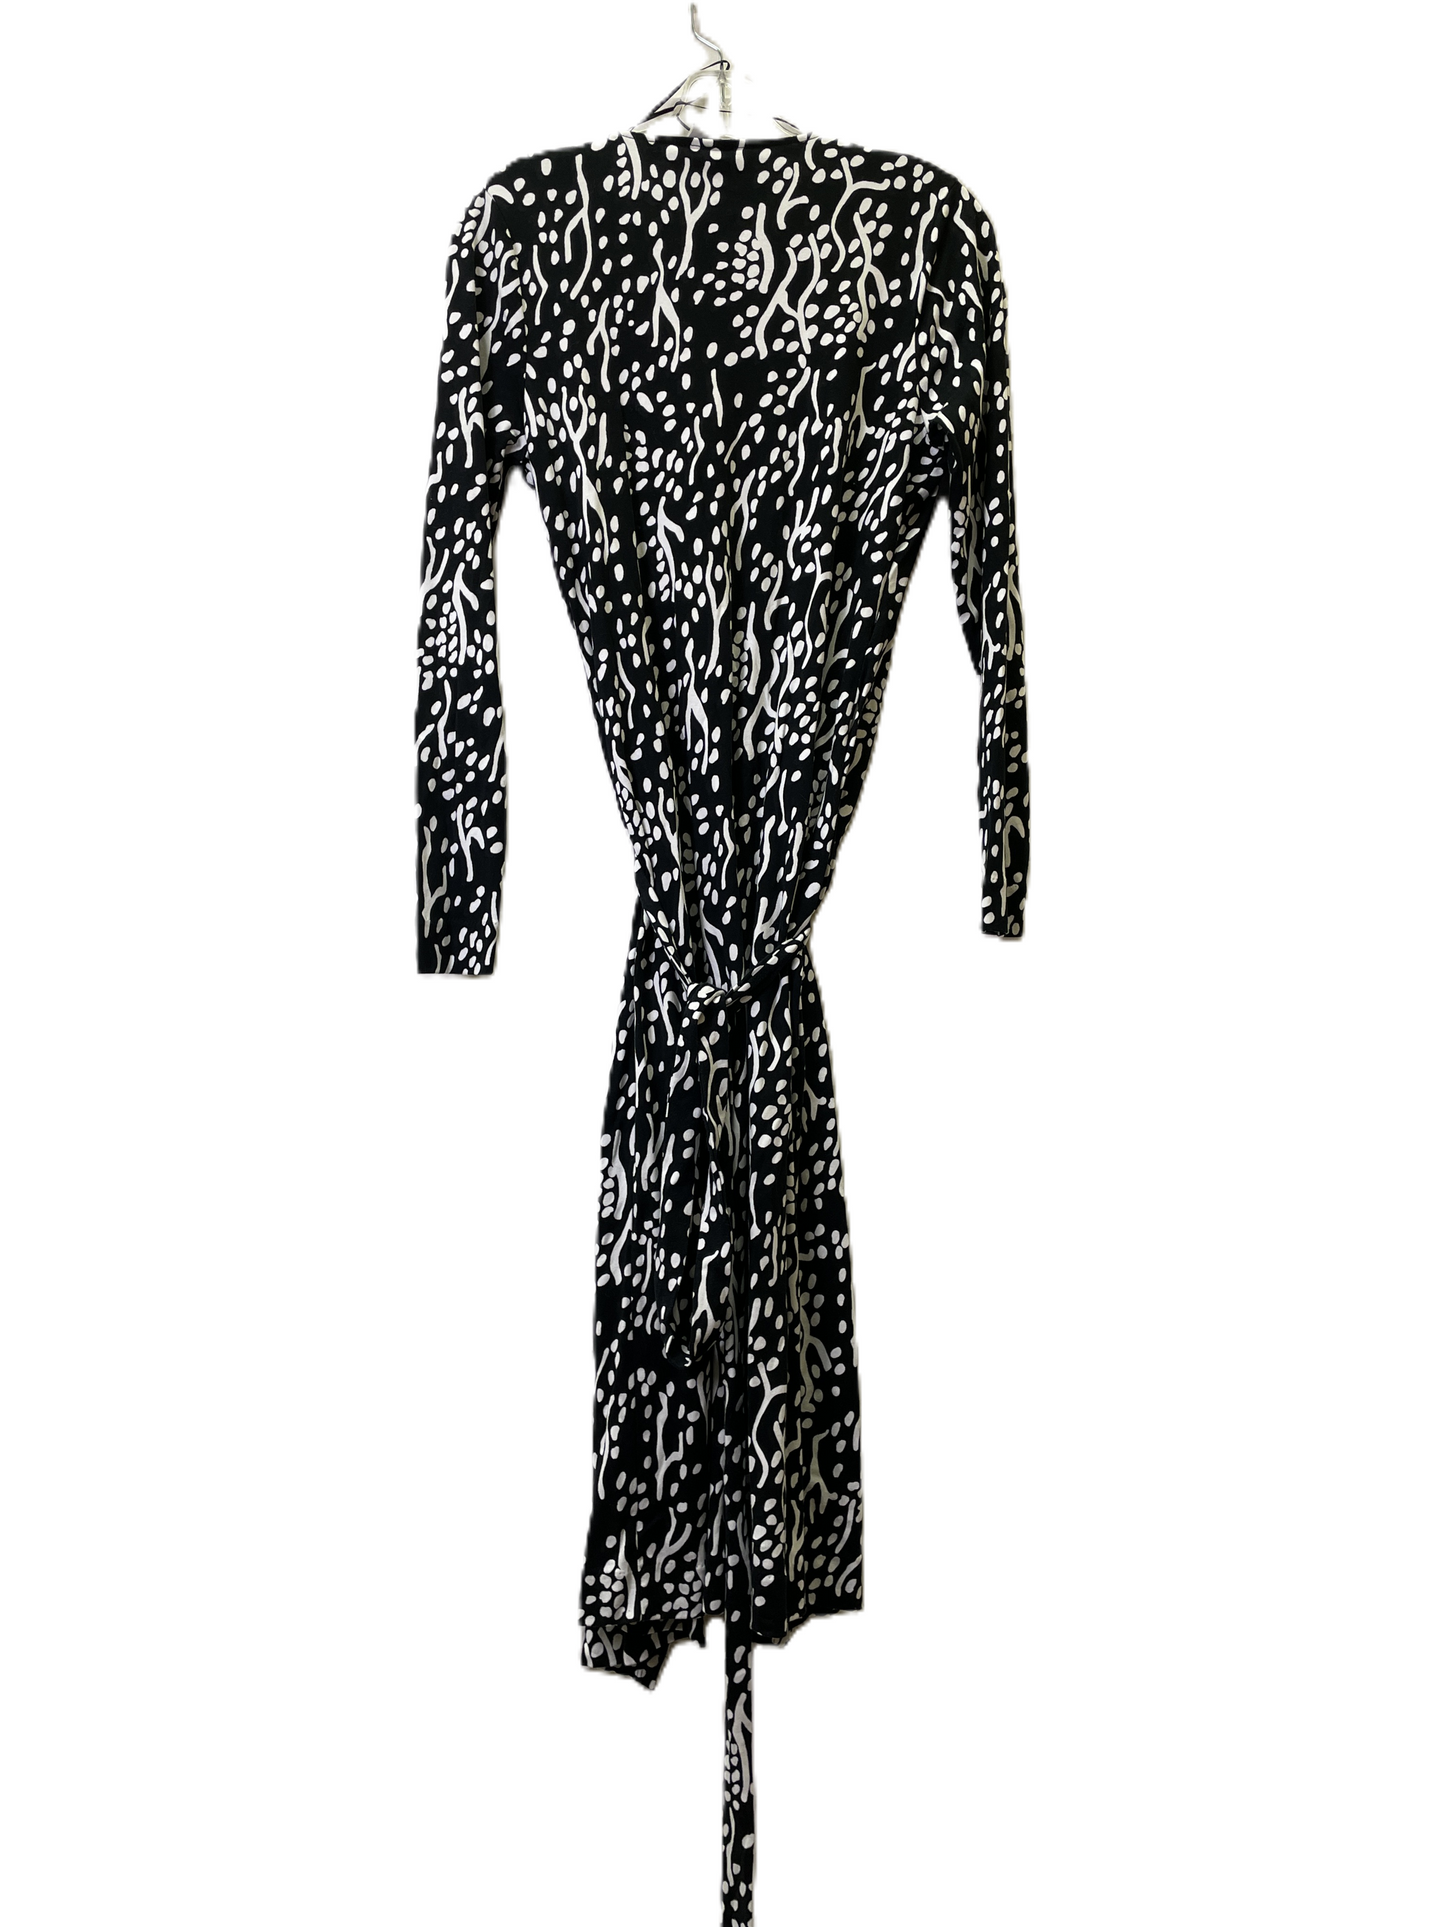 Black Dress Casual Midi By Target-designer, Size: M